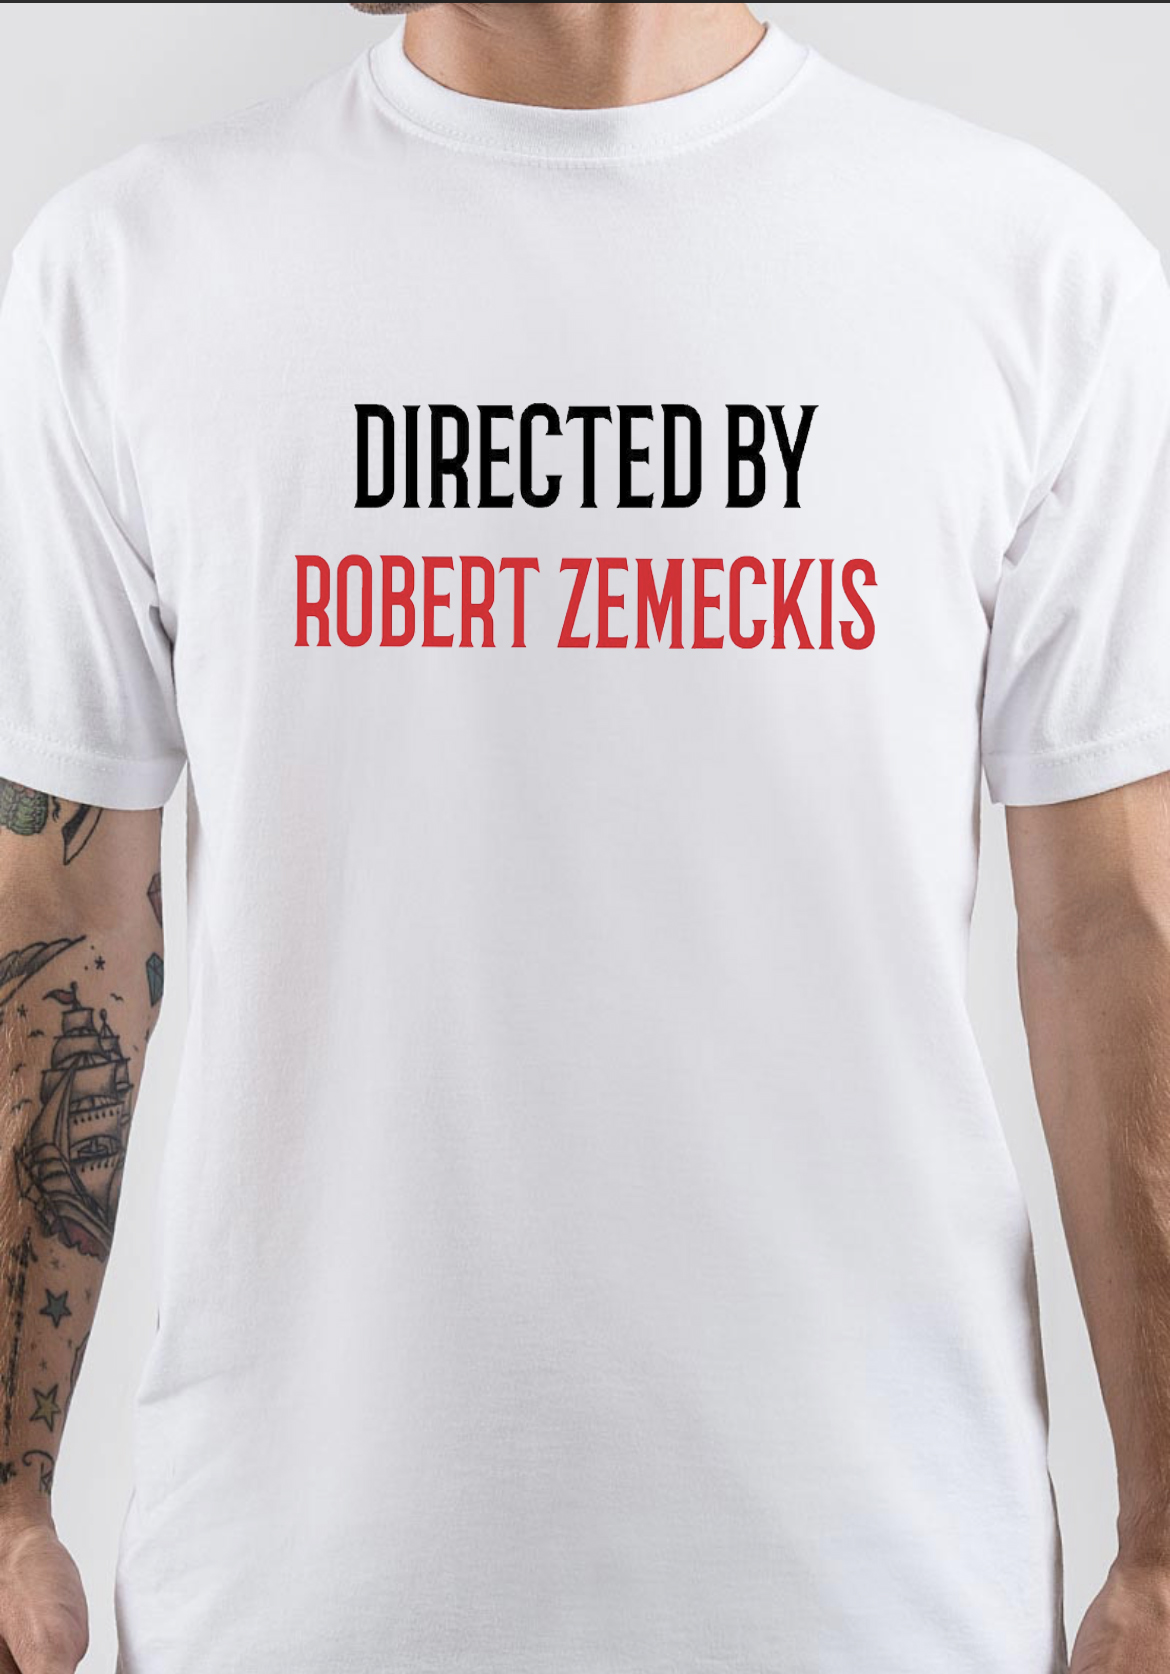 Robert Zemeckis T-Shirt And Merchandise